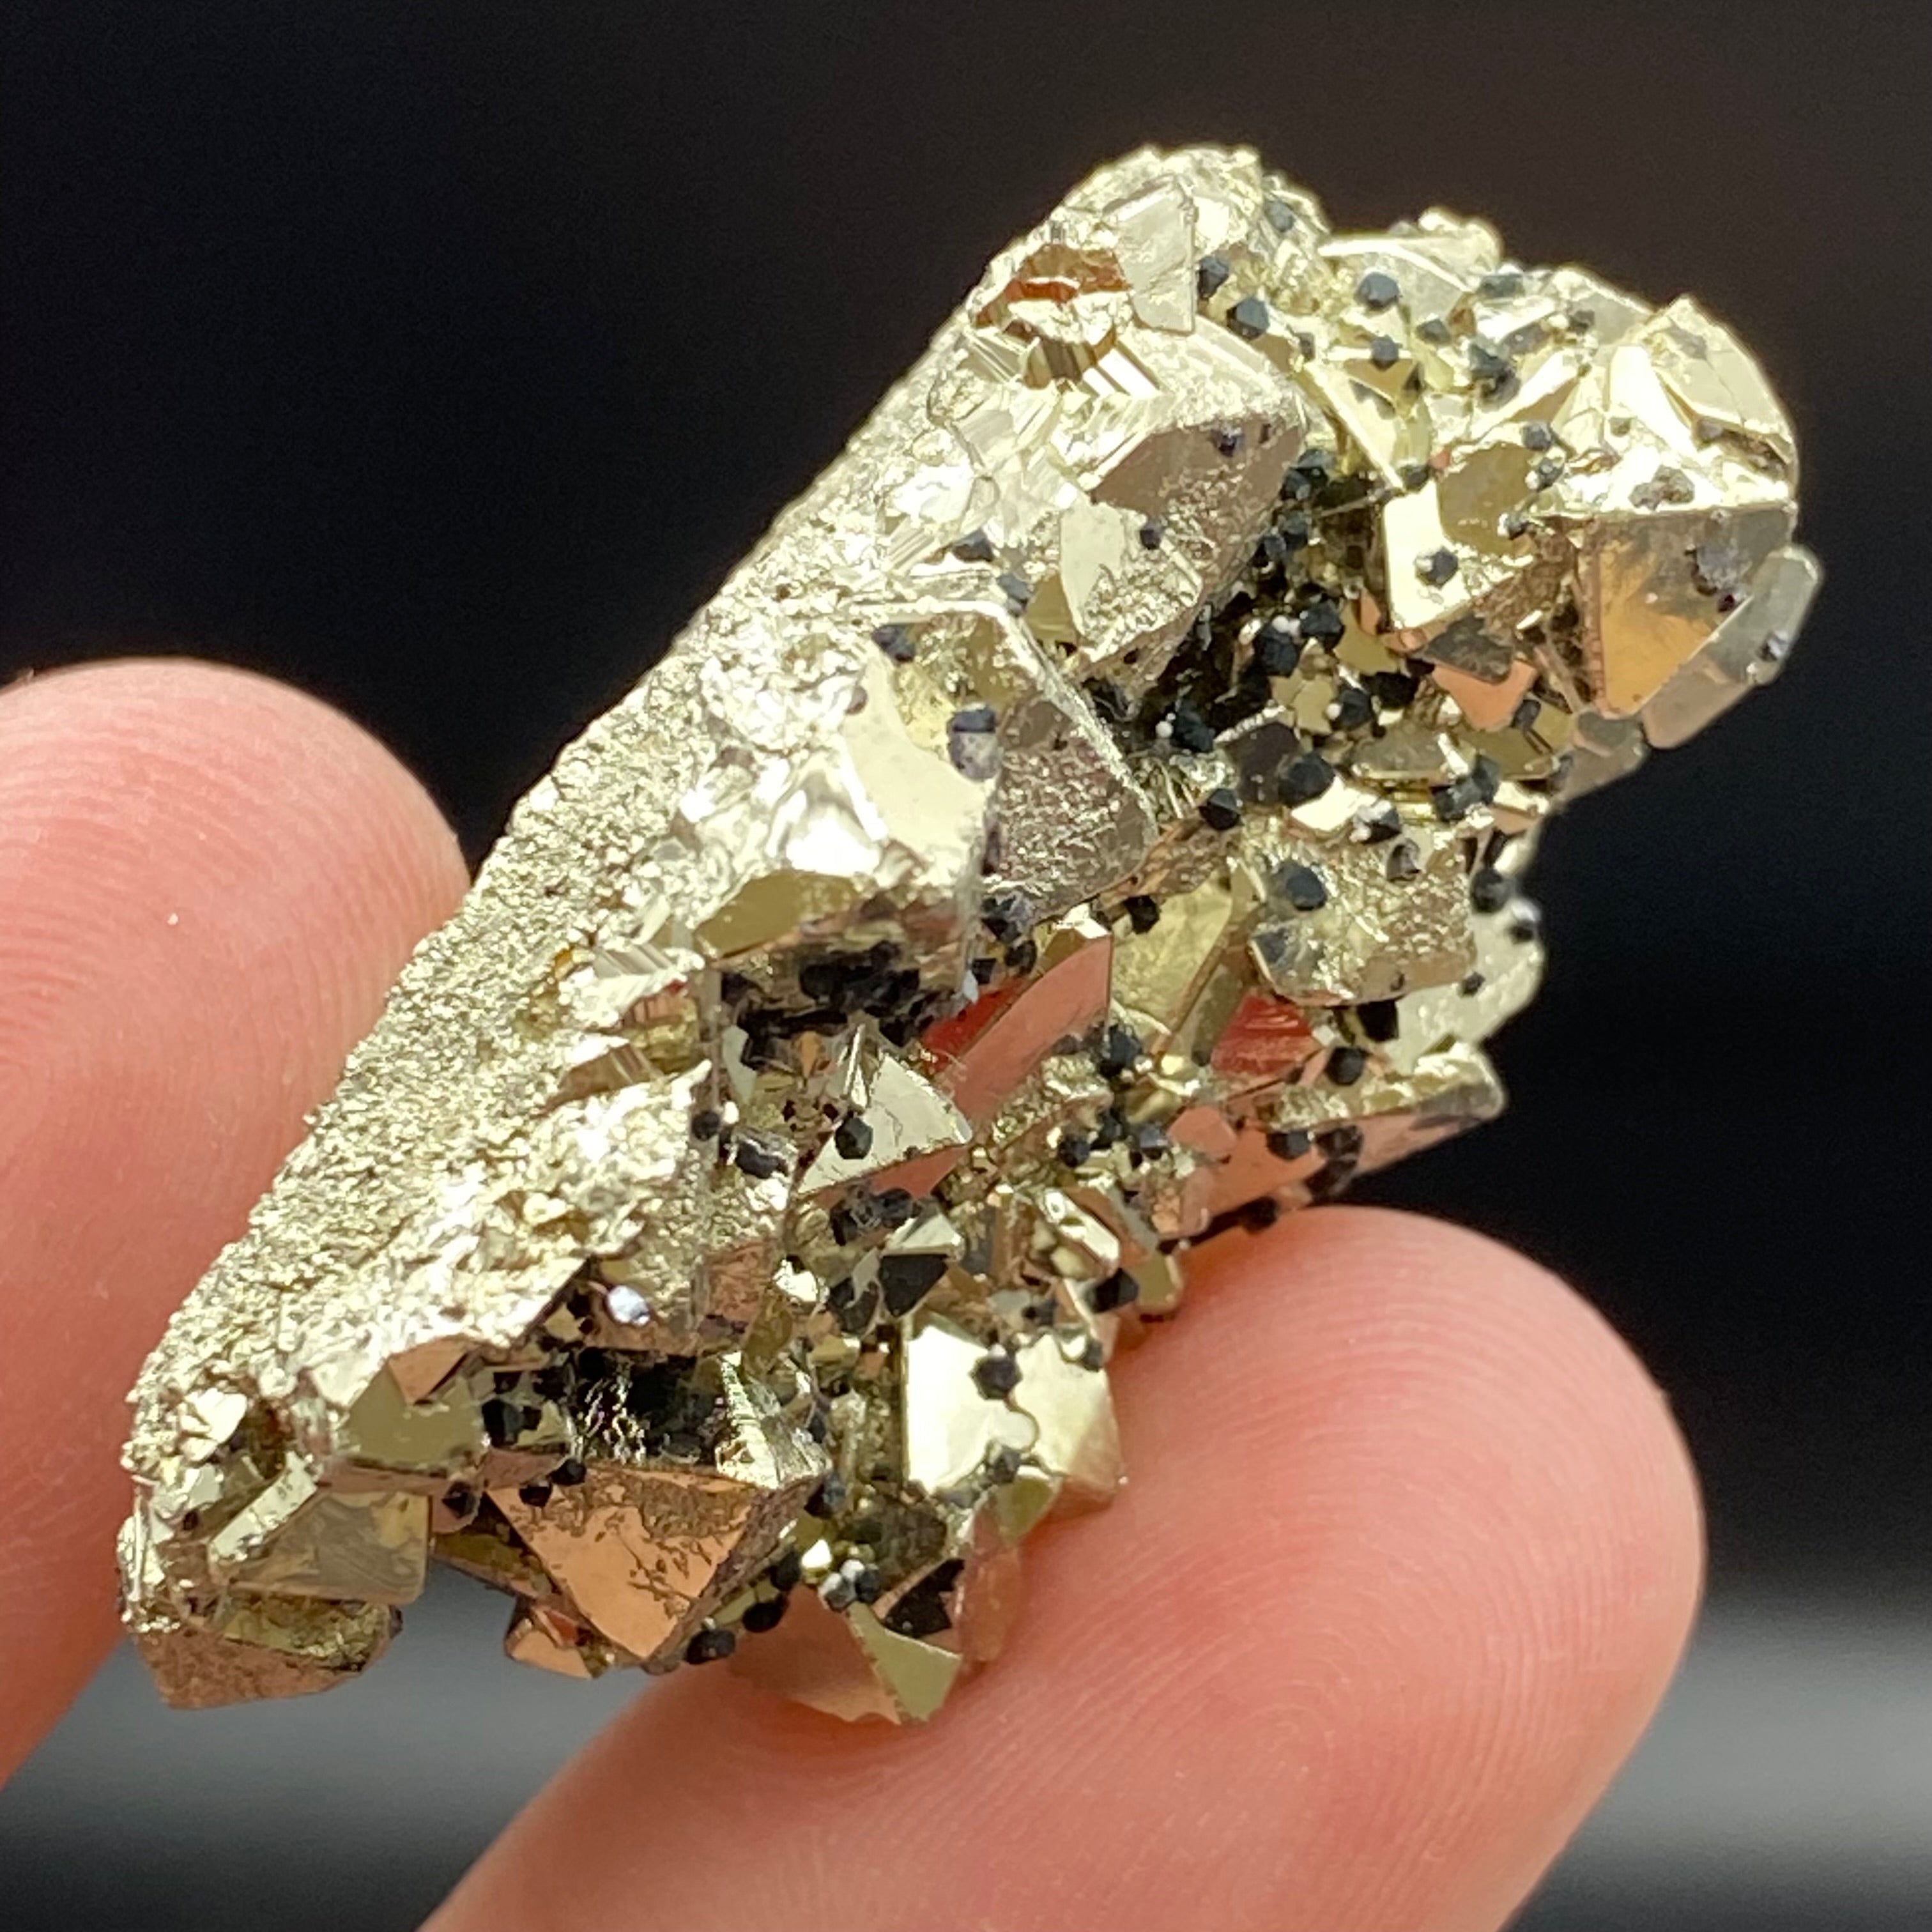 Peruvian Pyrite Crystal - 117